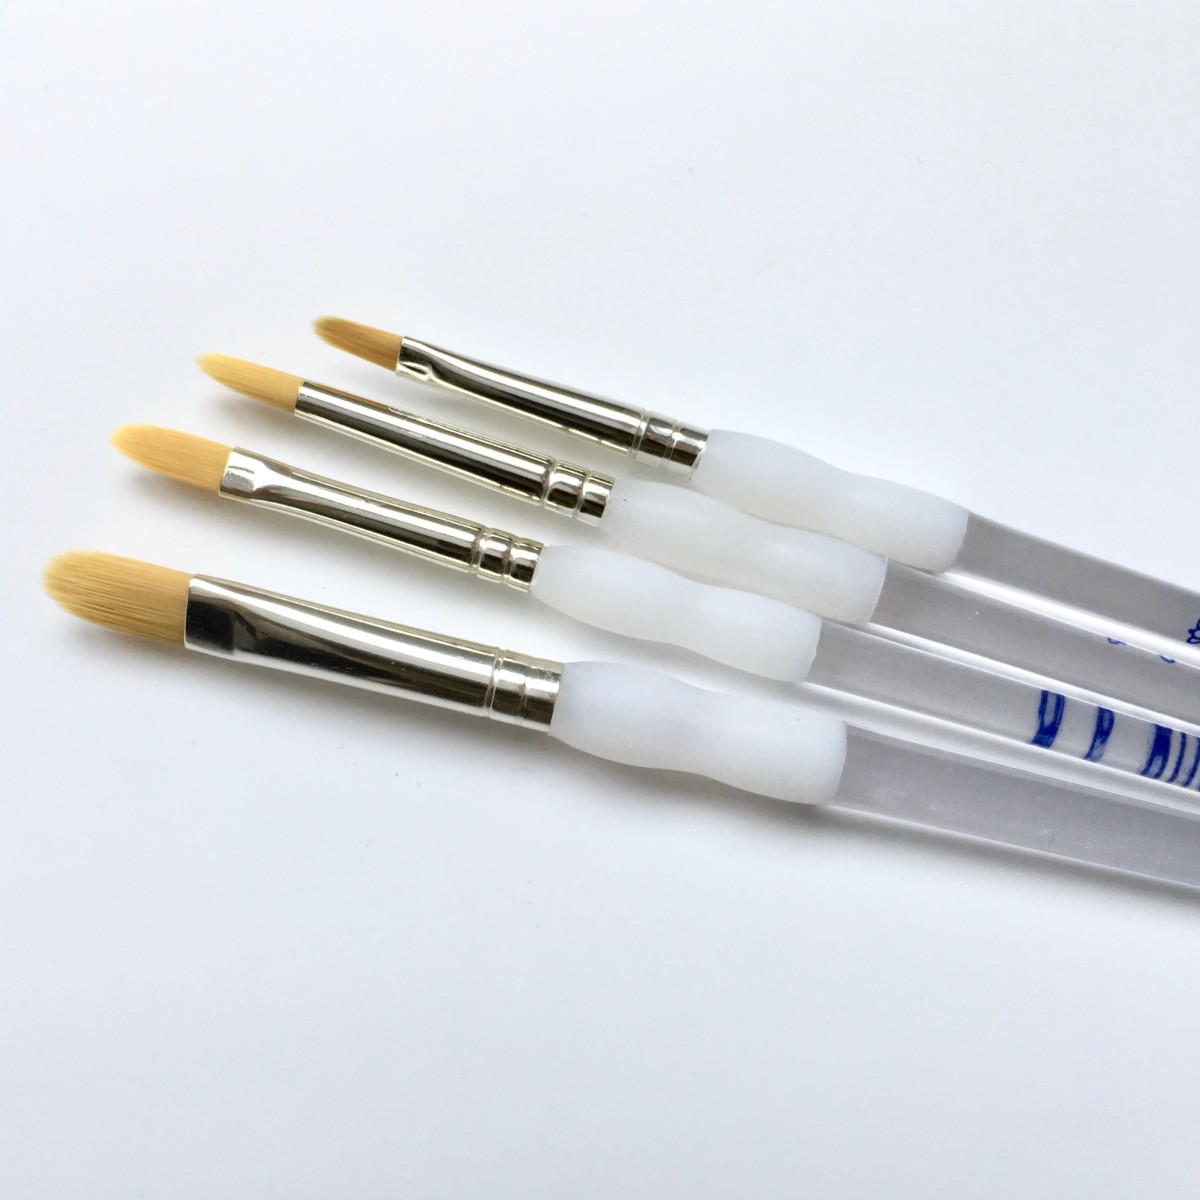 Art paint brushes